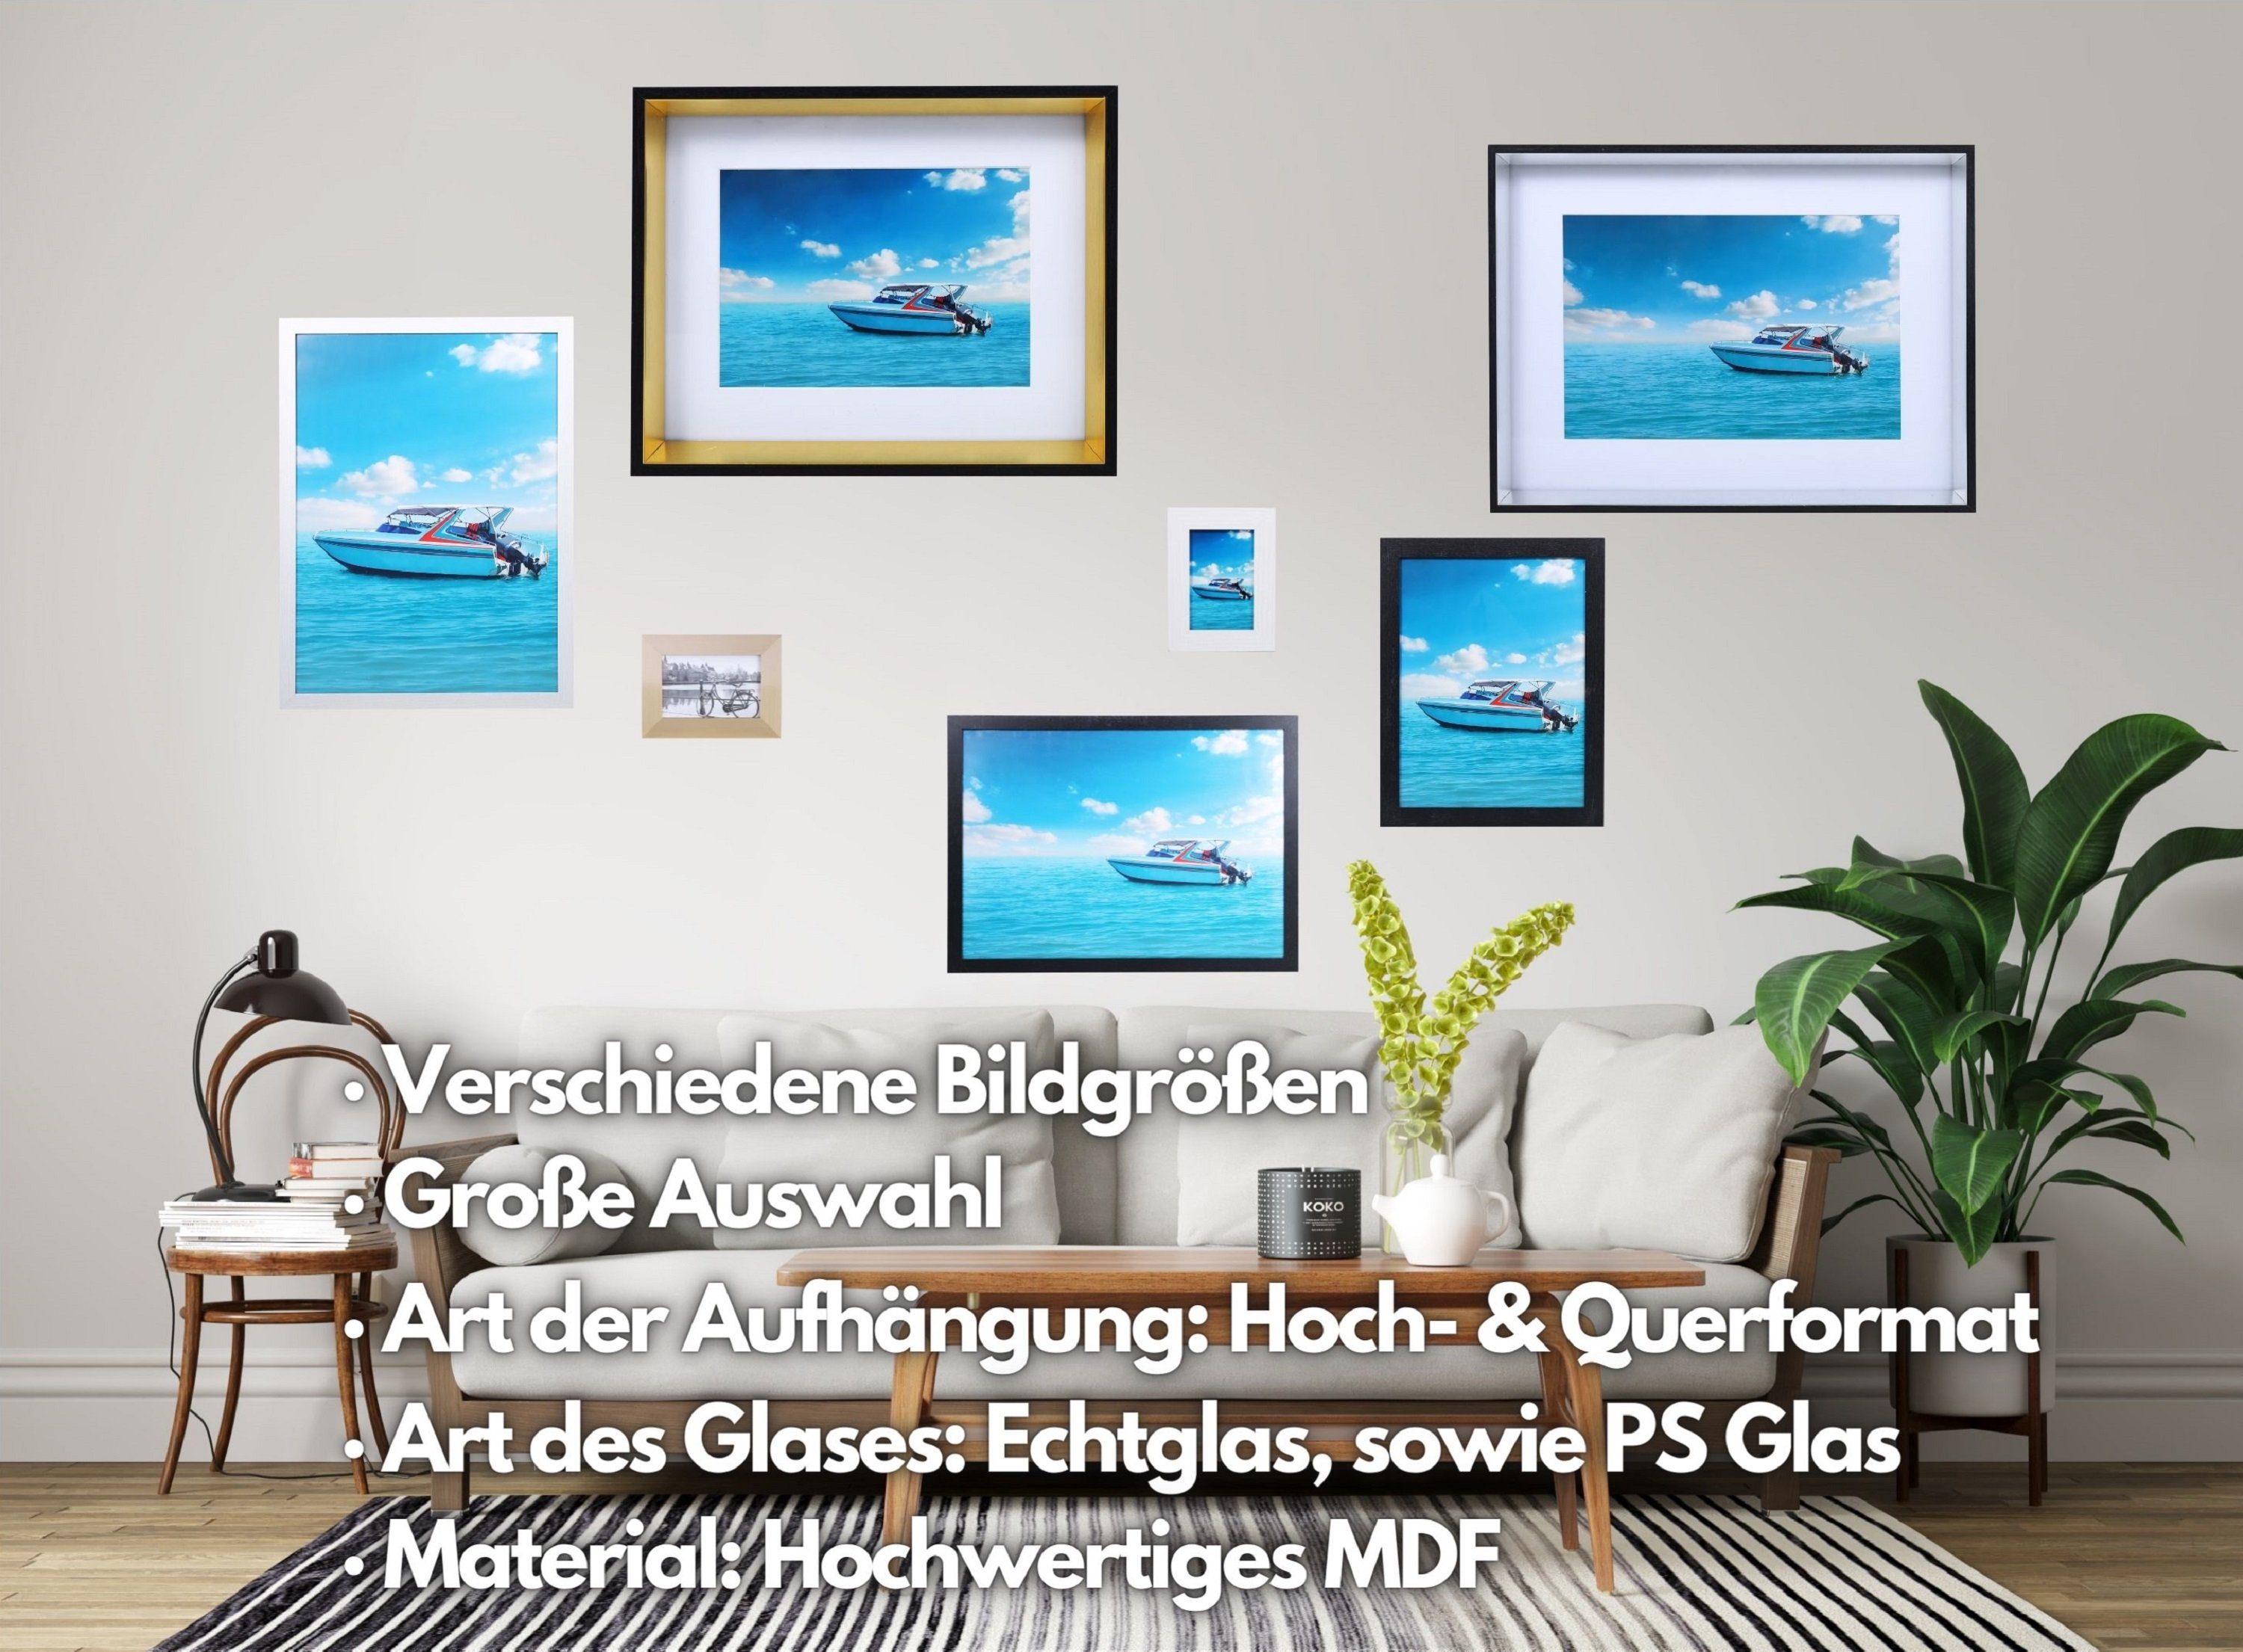 ecosa Bilderrahmen EO-8130, Echtglas, & Material: Querformat, MDF, Hoch- Echtholzdesign, Wandhalterung